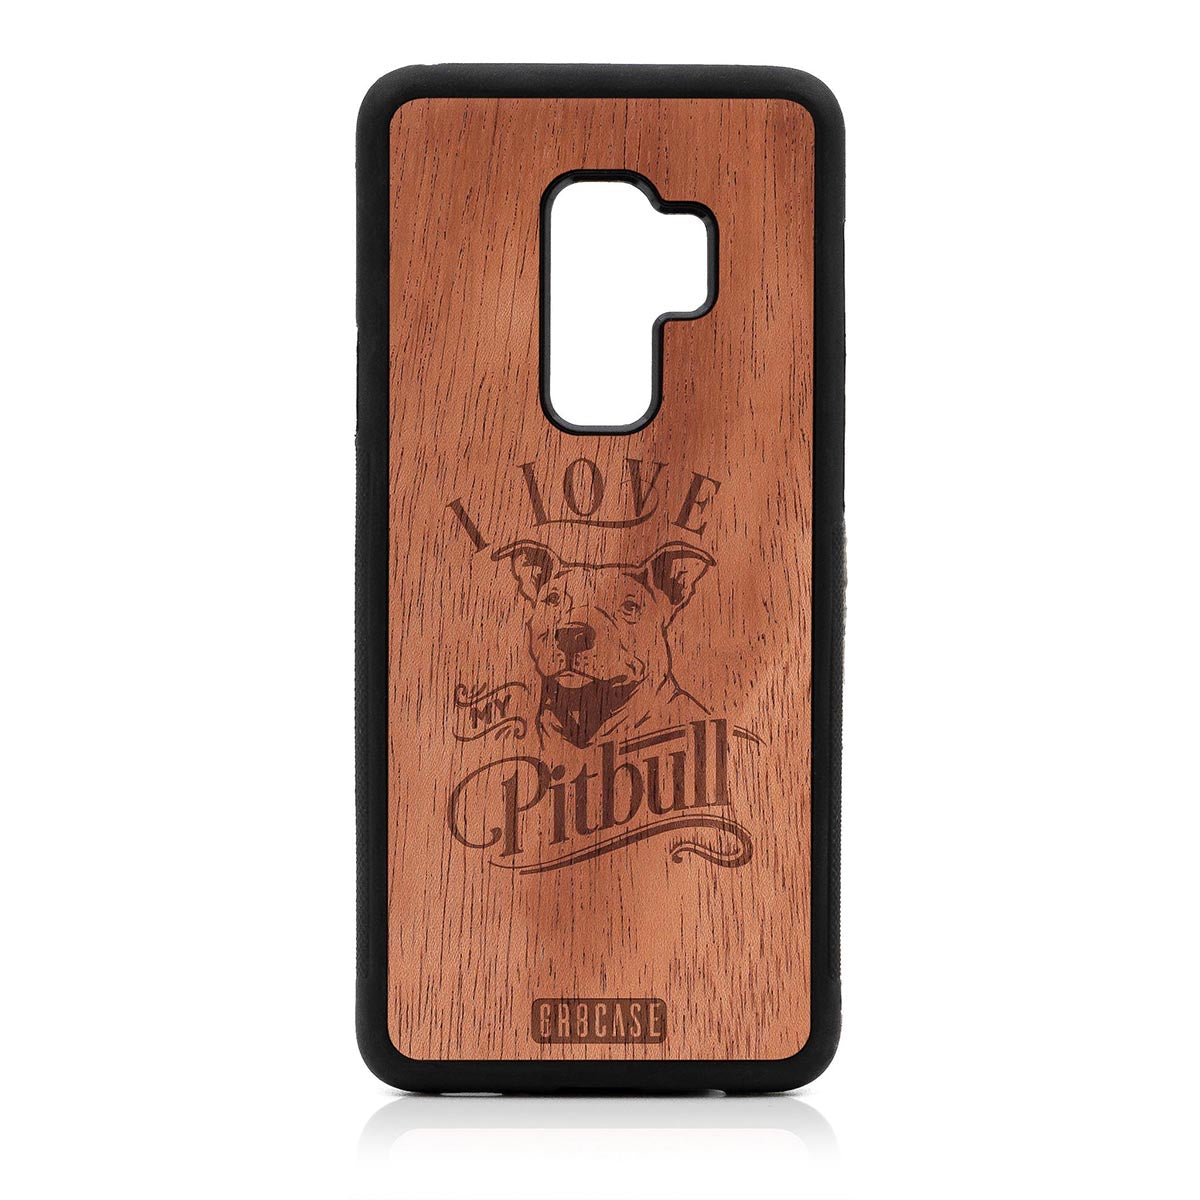 I Love My Pitbull Design Wood Case Samsung Galaxy S9 Plus by GR8CASE